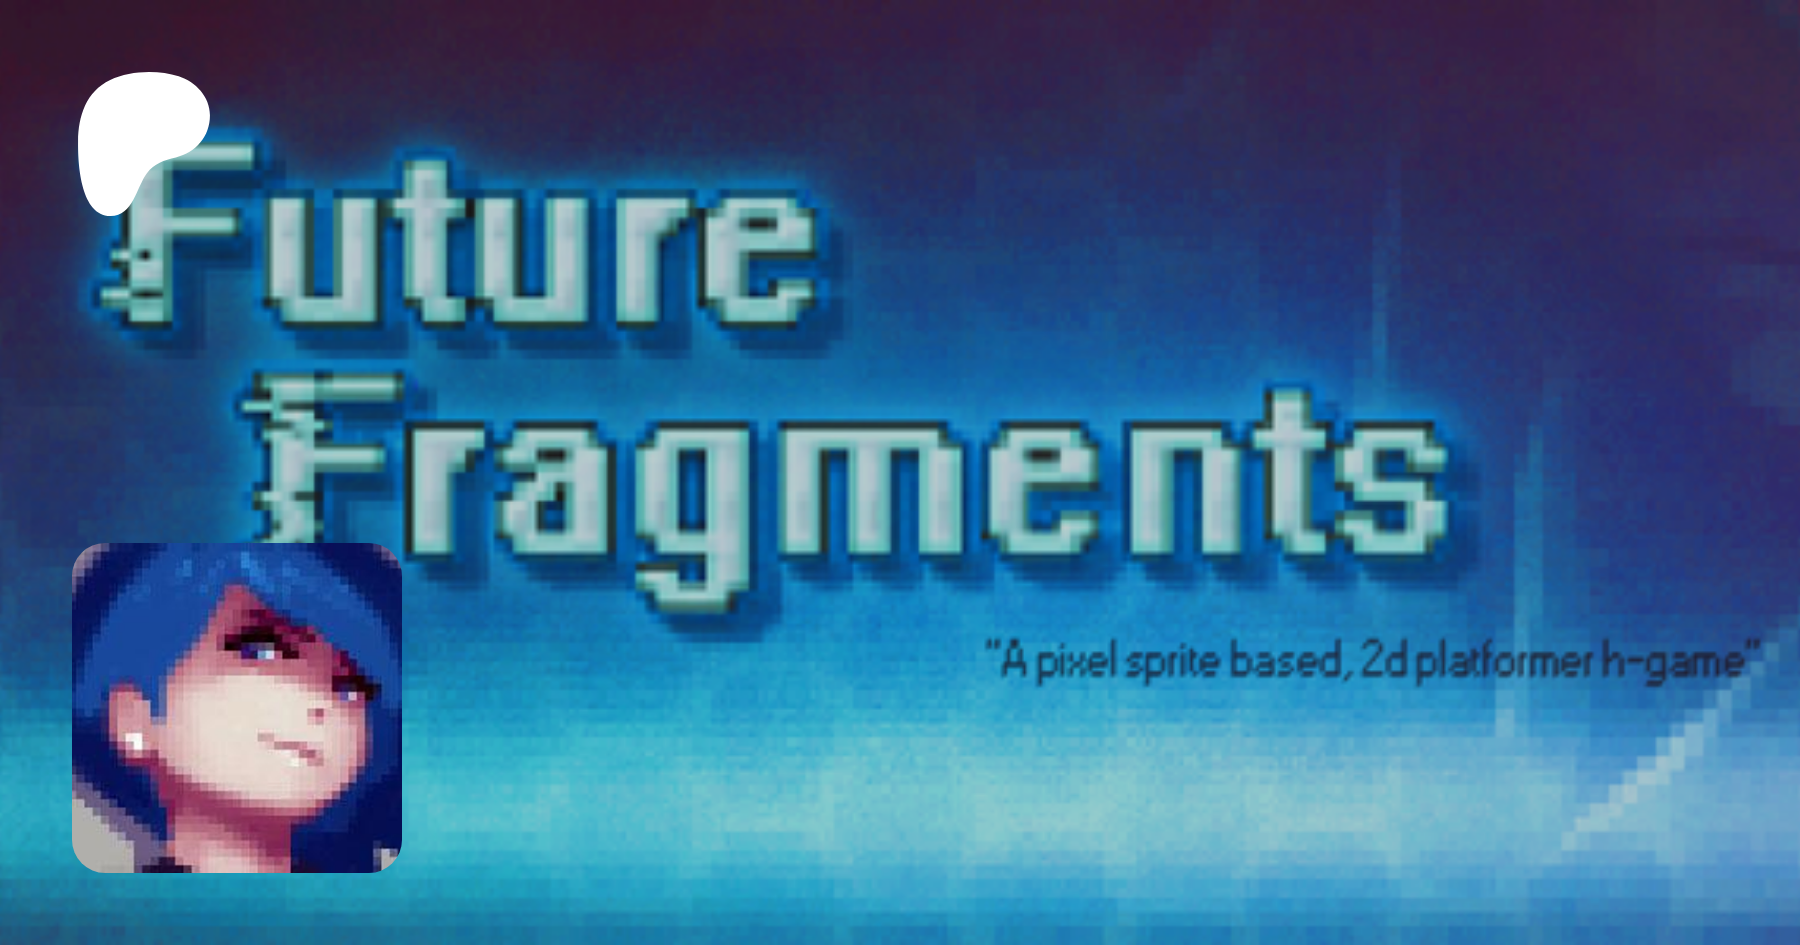 Future fragments patreon